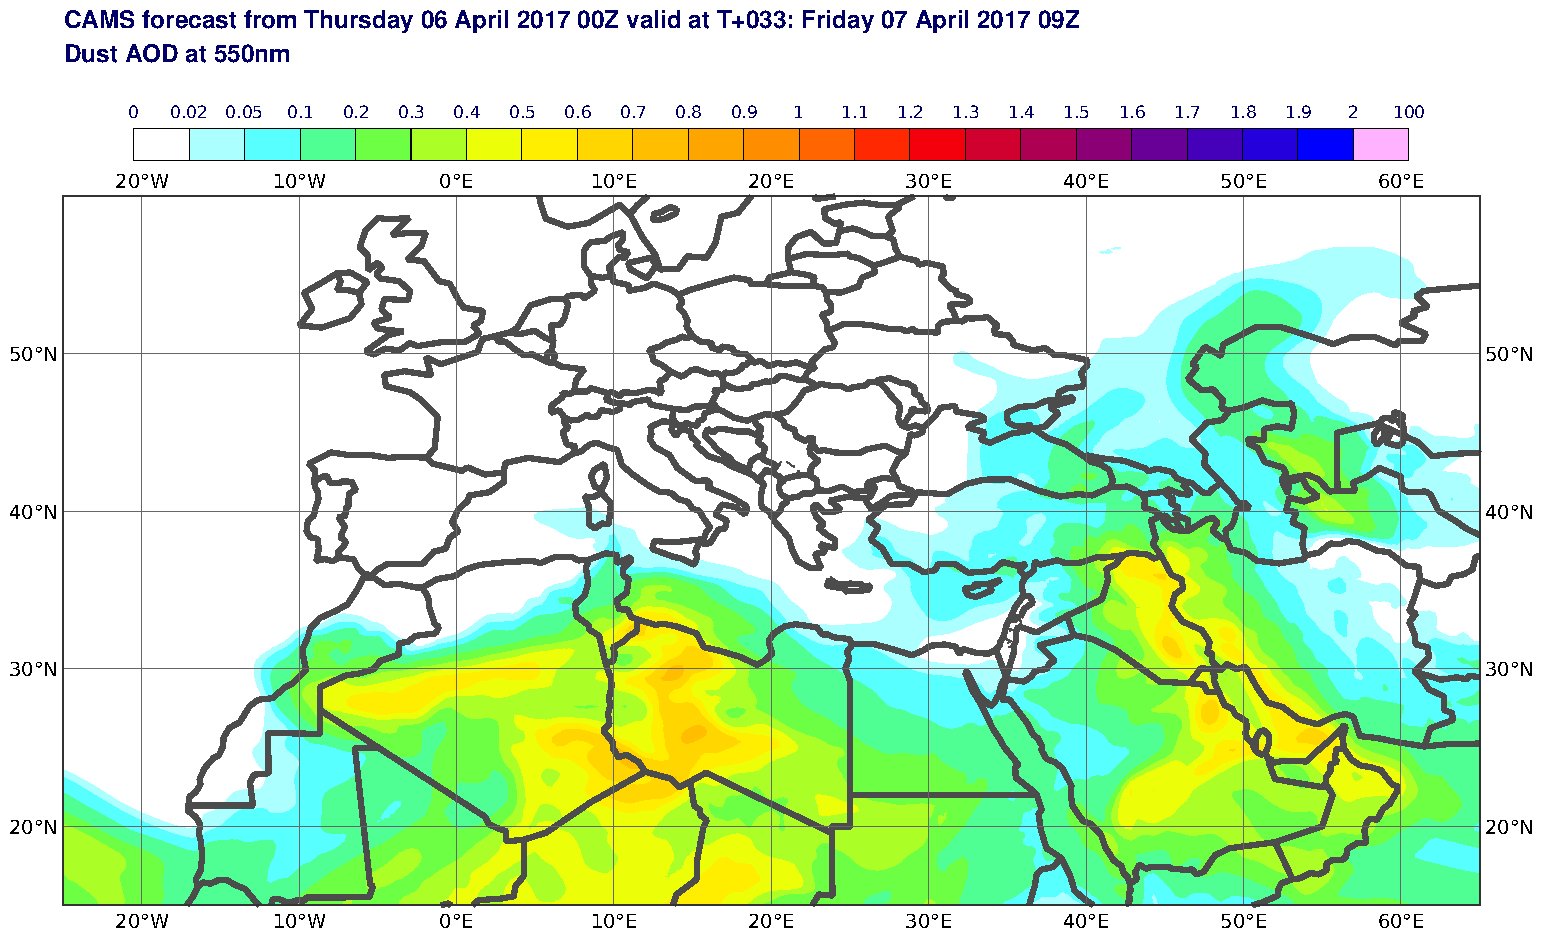 Dust AOD at 550nm valid at T33 - 2017-04-07 09:00